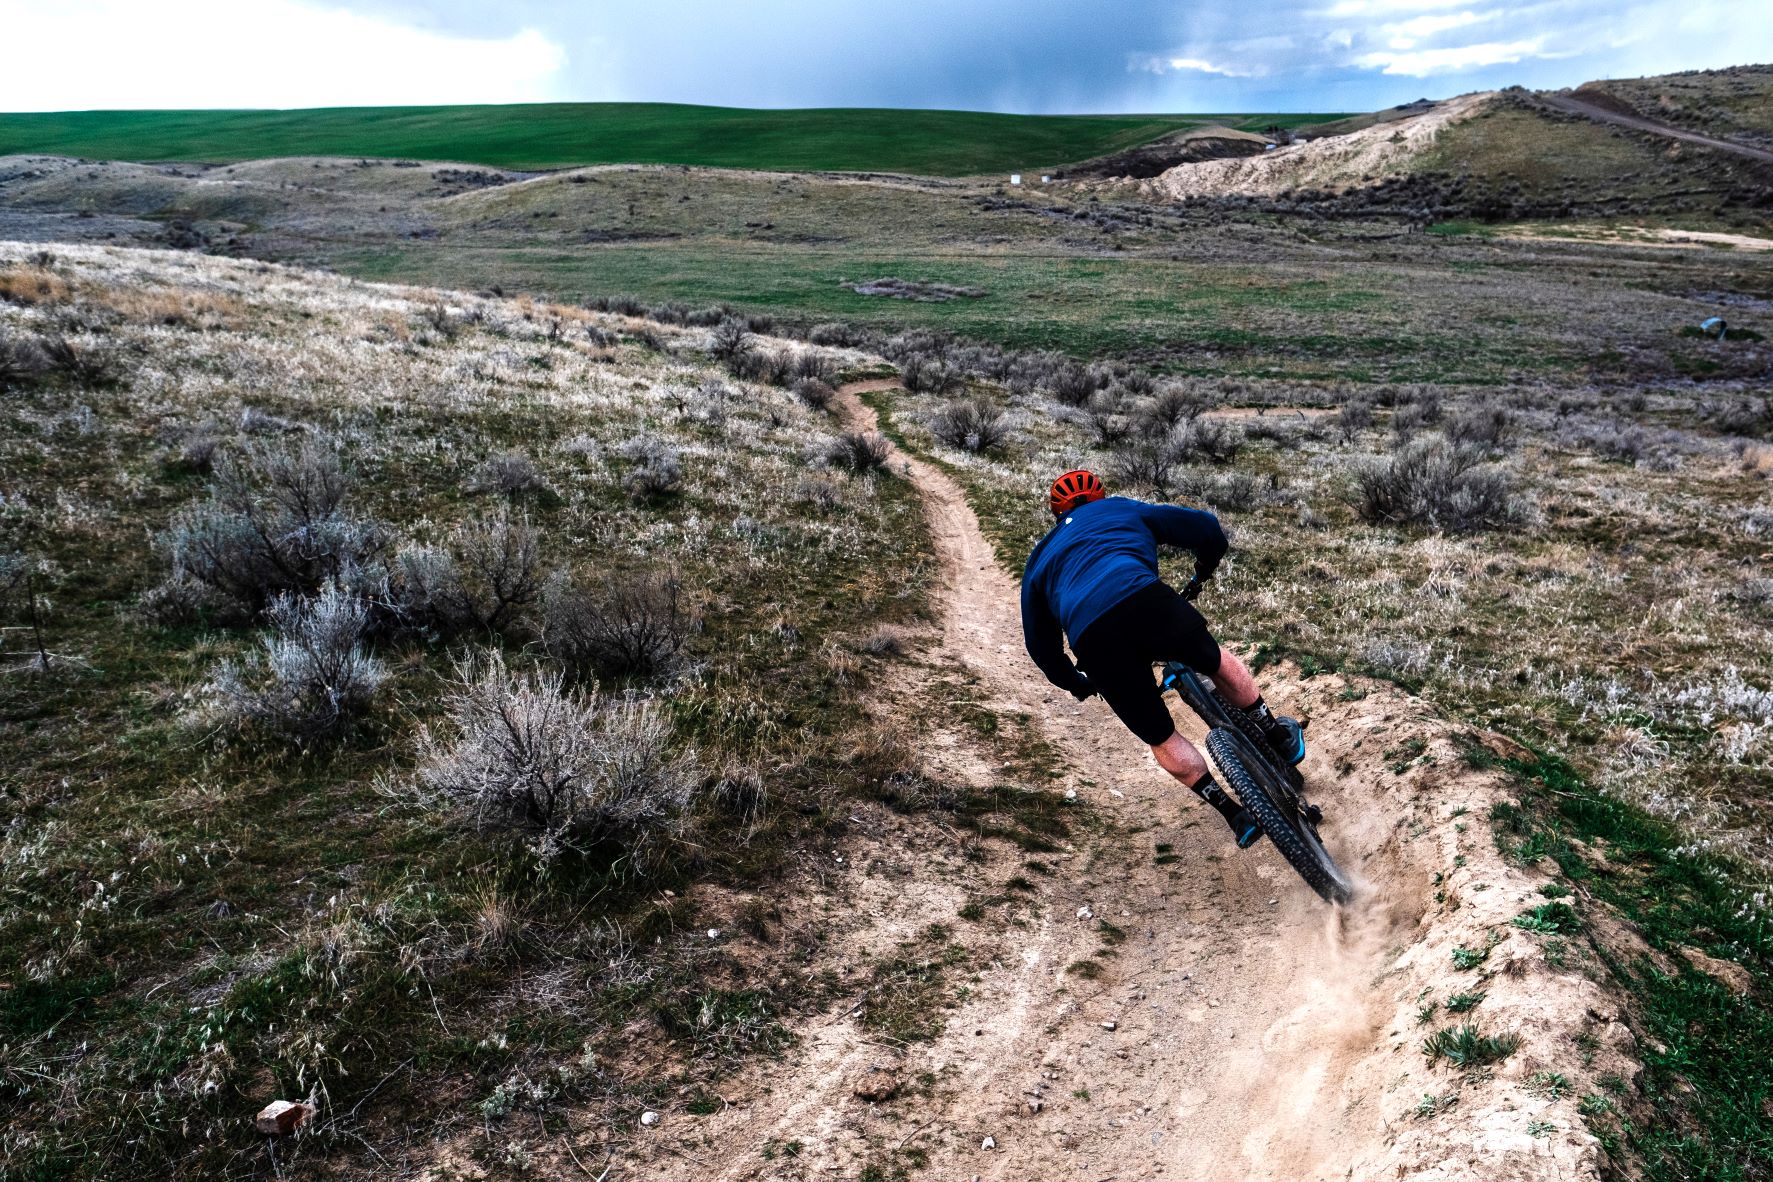 Mountain biker rounding a corner on a dirt singletrack through the rugged landscape of eastern Oregon.